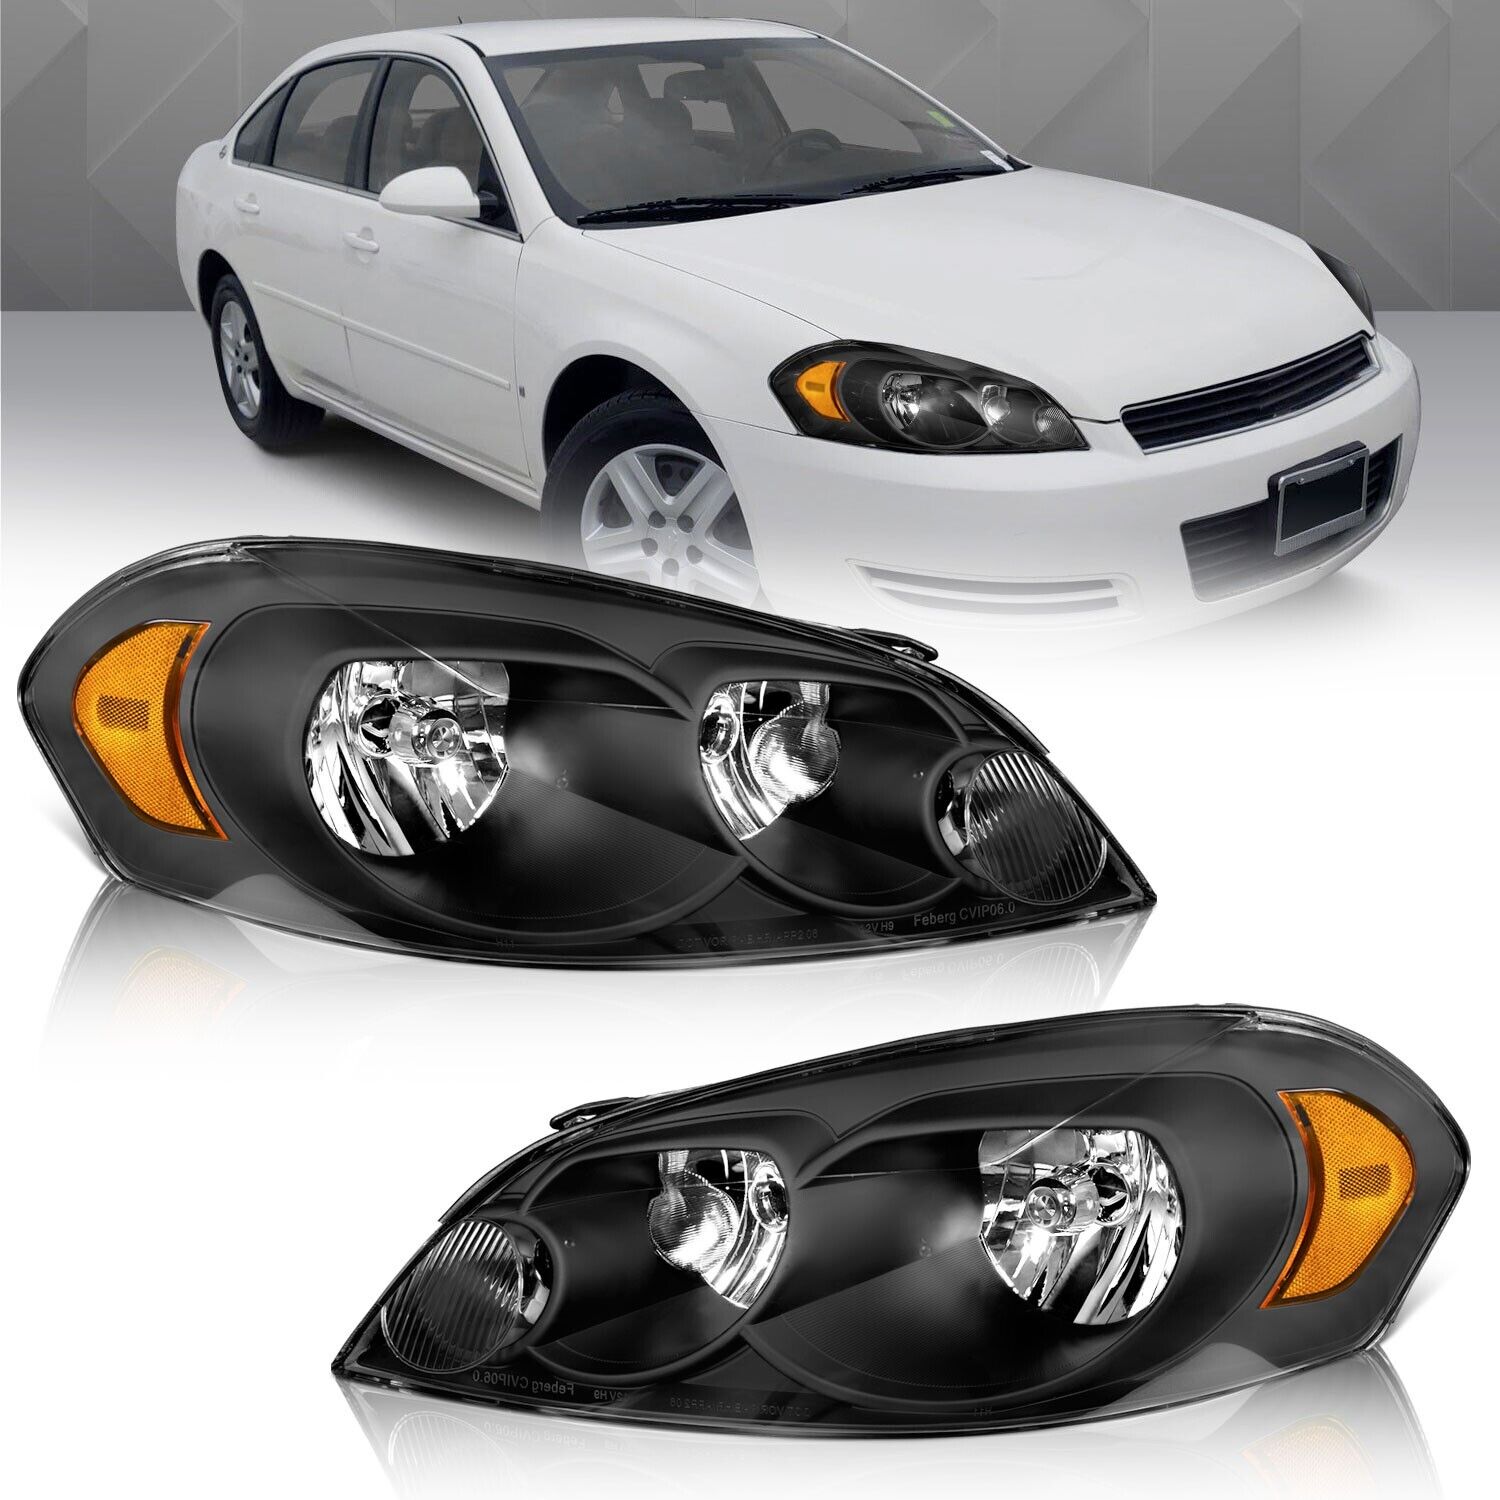 WEELMOTO Headlights For 2006-2013 Chevy Impala 2006-2007 Monte Carlo Headlamps